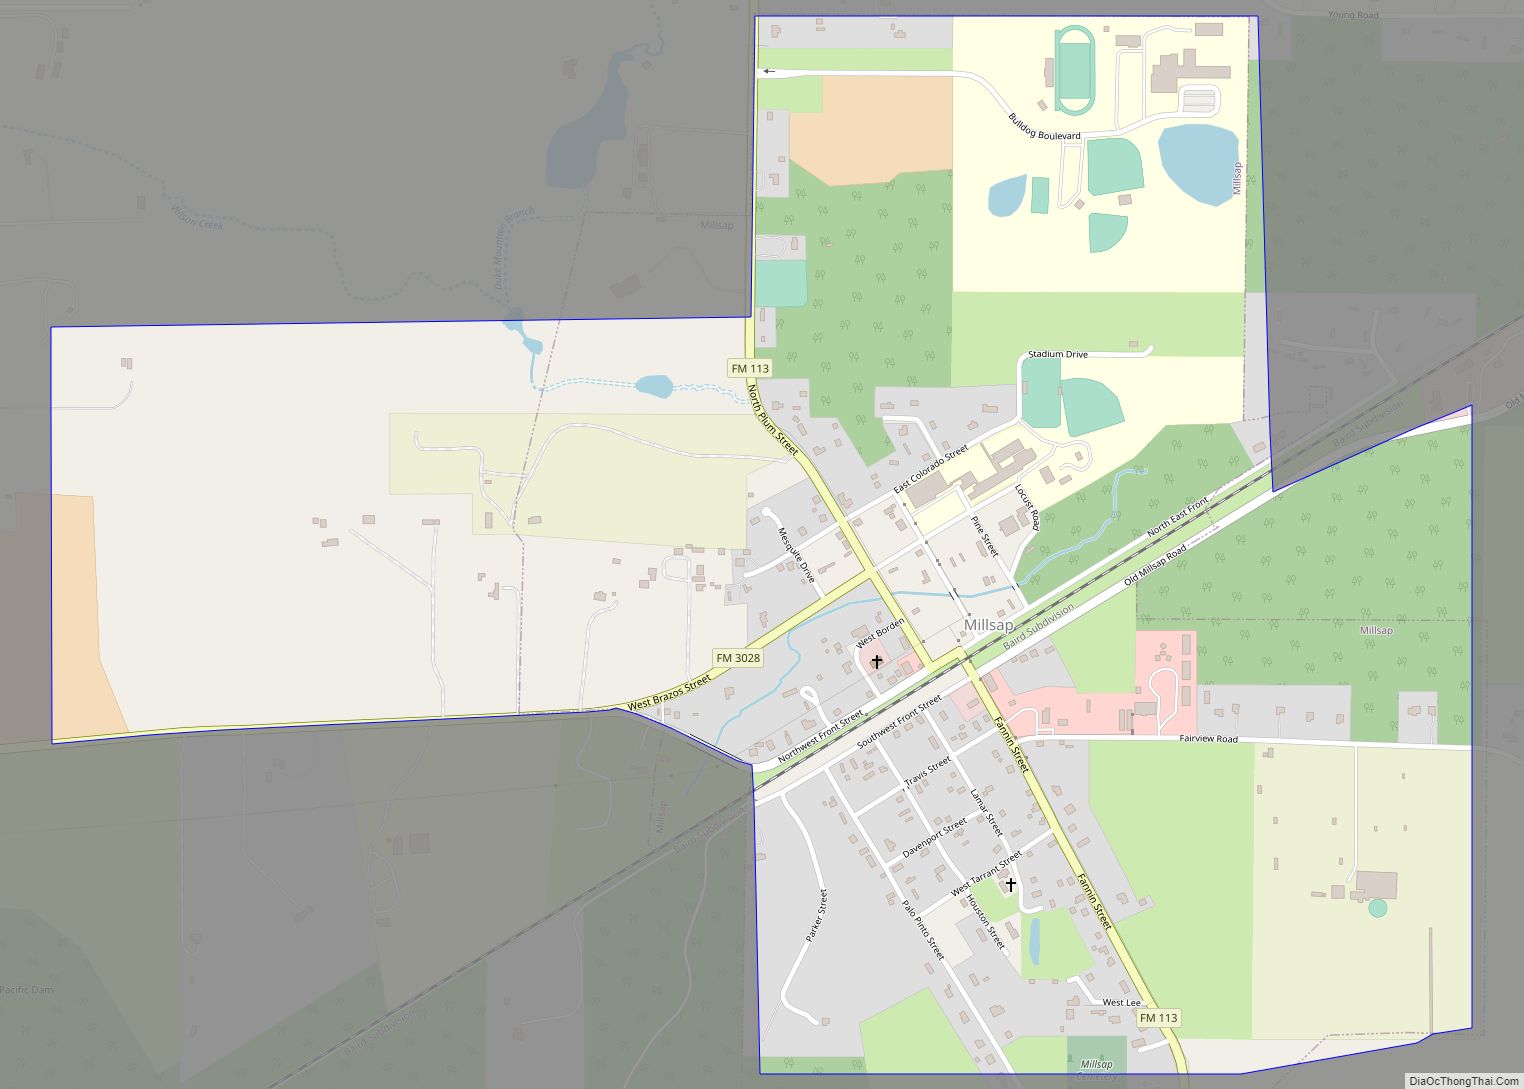 Map of Millsap town